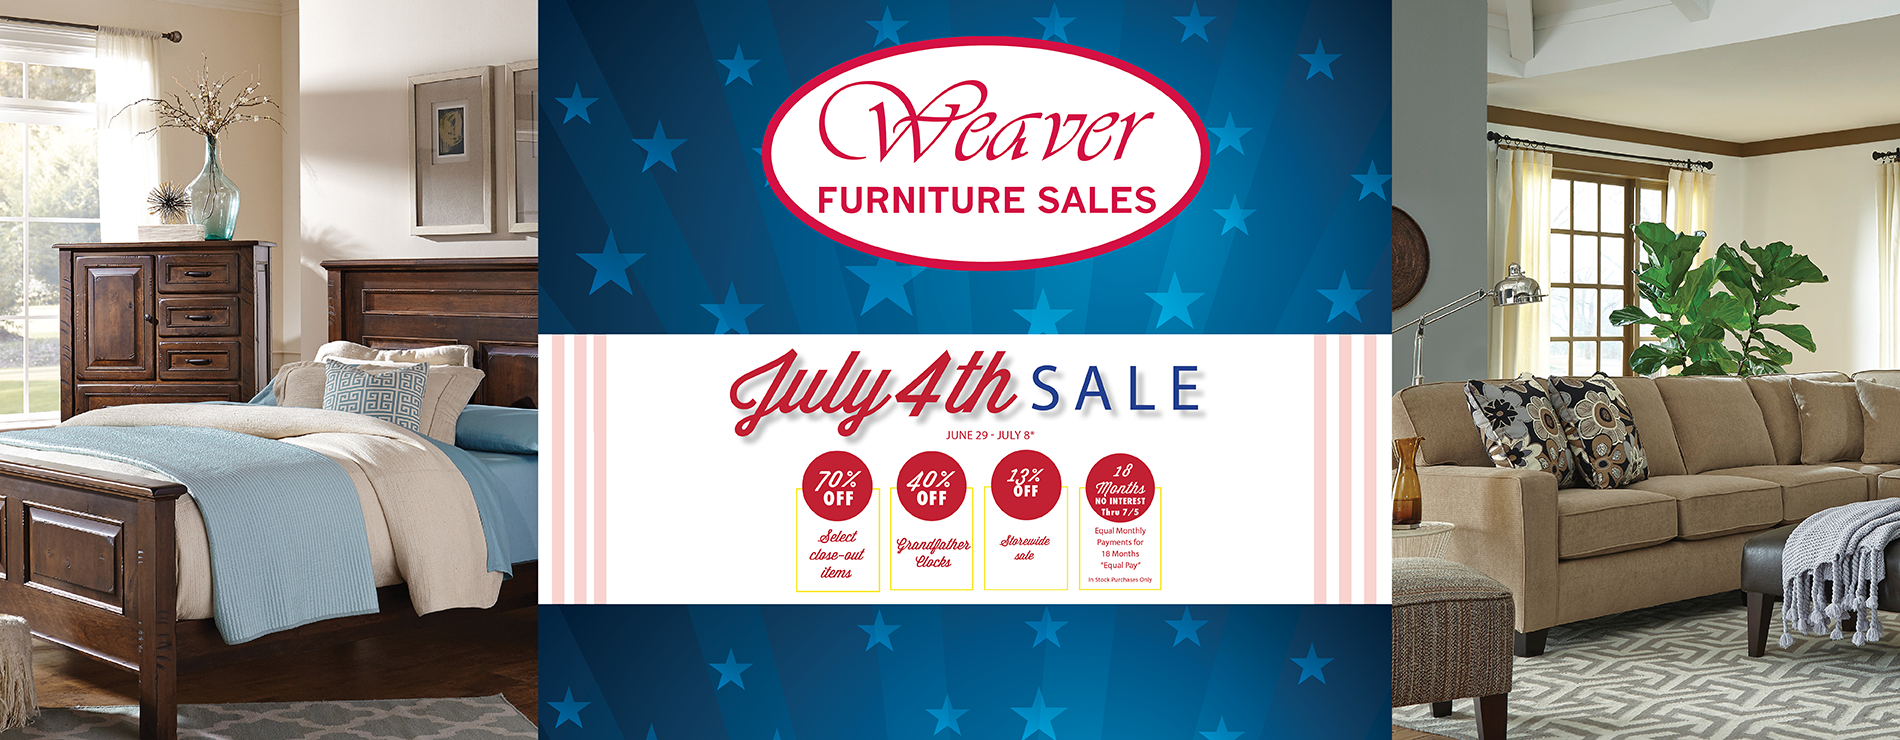 Weaver Amish Furniture July 4th Sale 2019 Weaver Furniture Sales